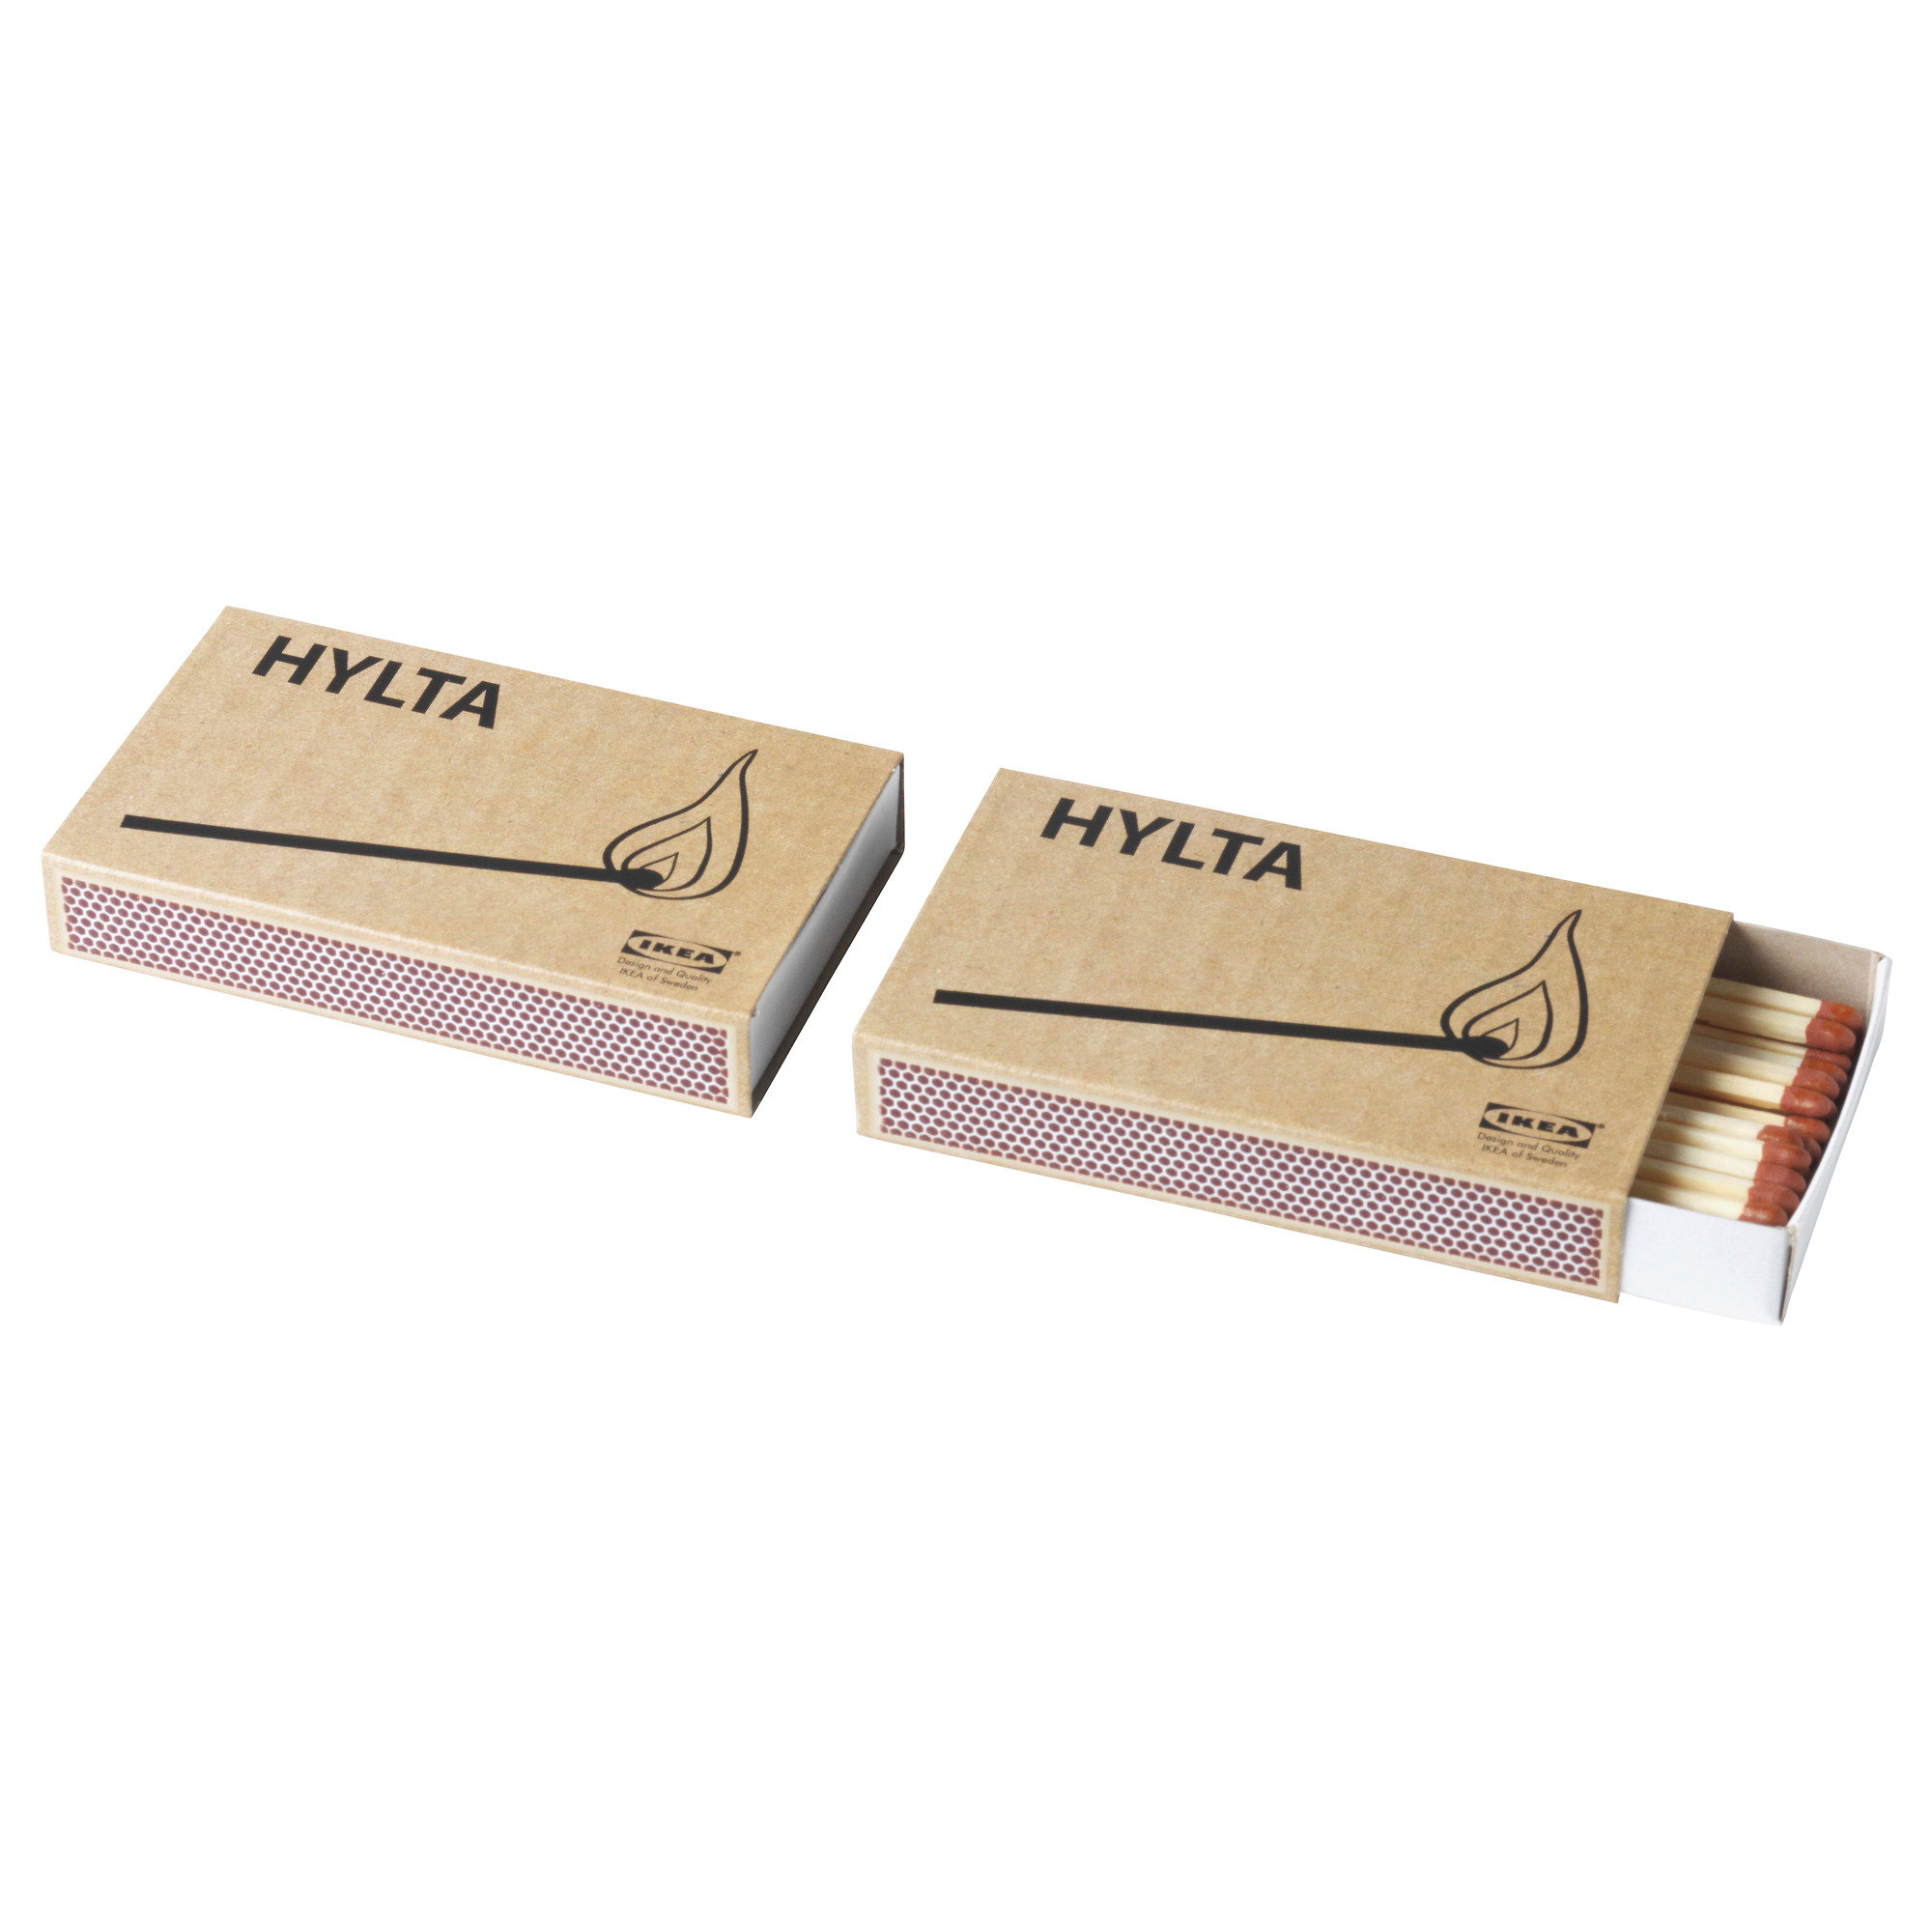 HYLTA box of matches